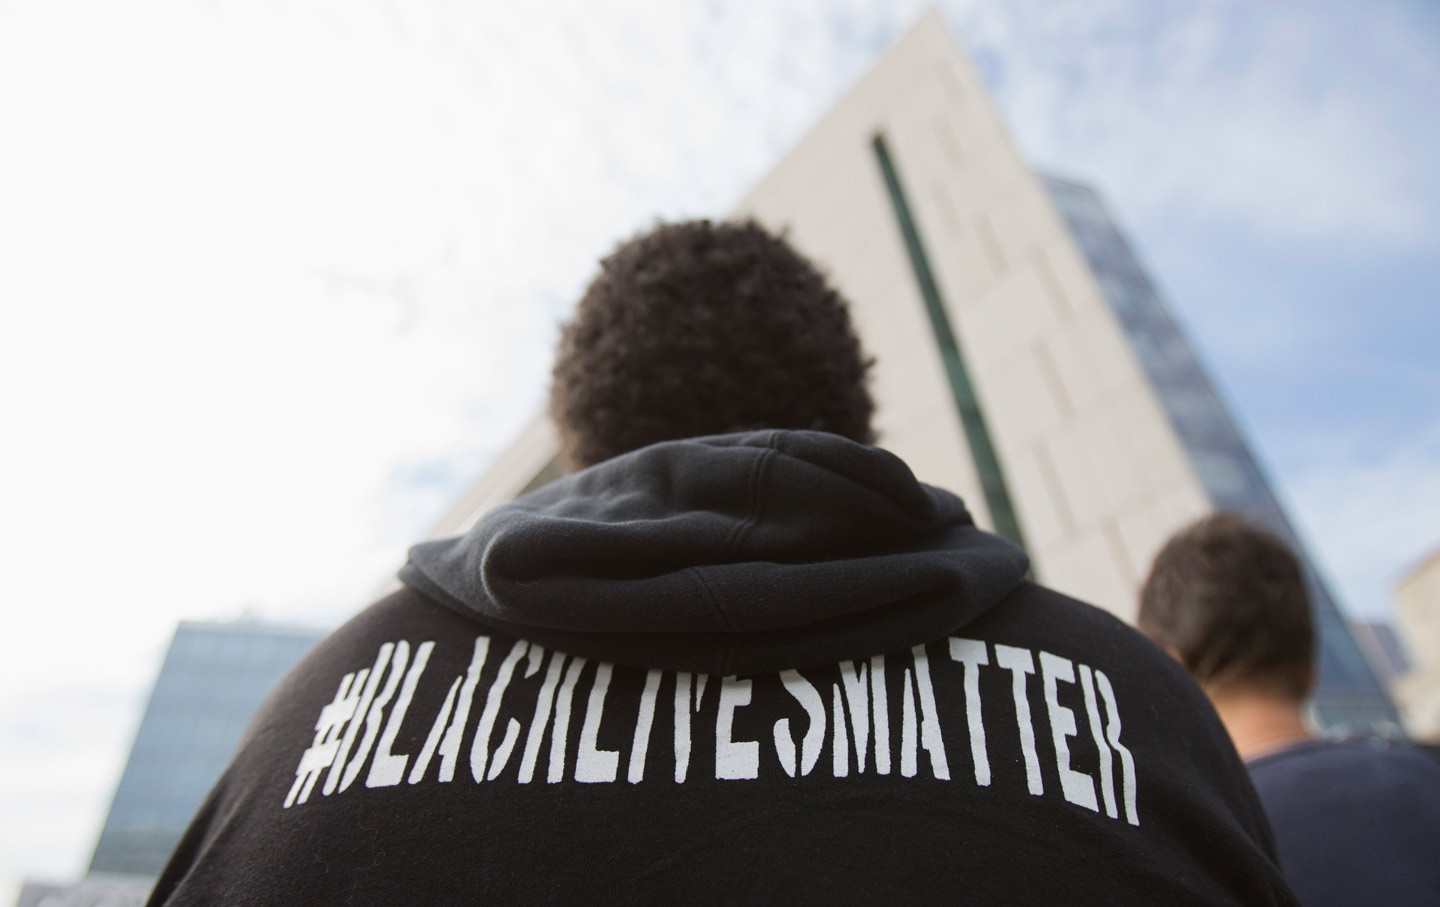 Black Lives Matter activist